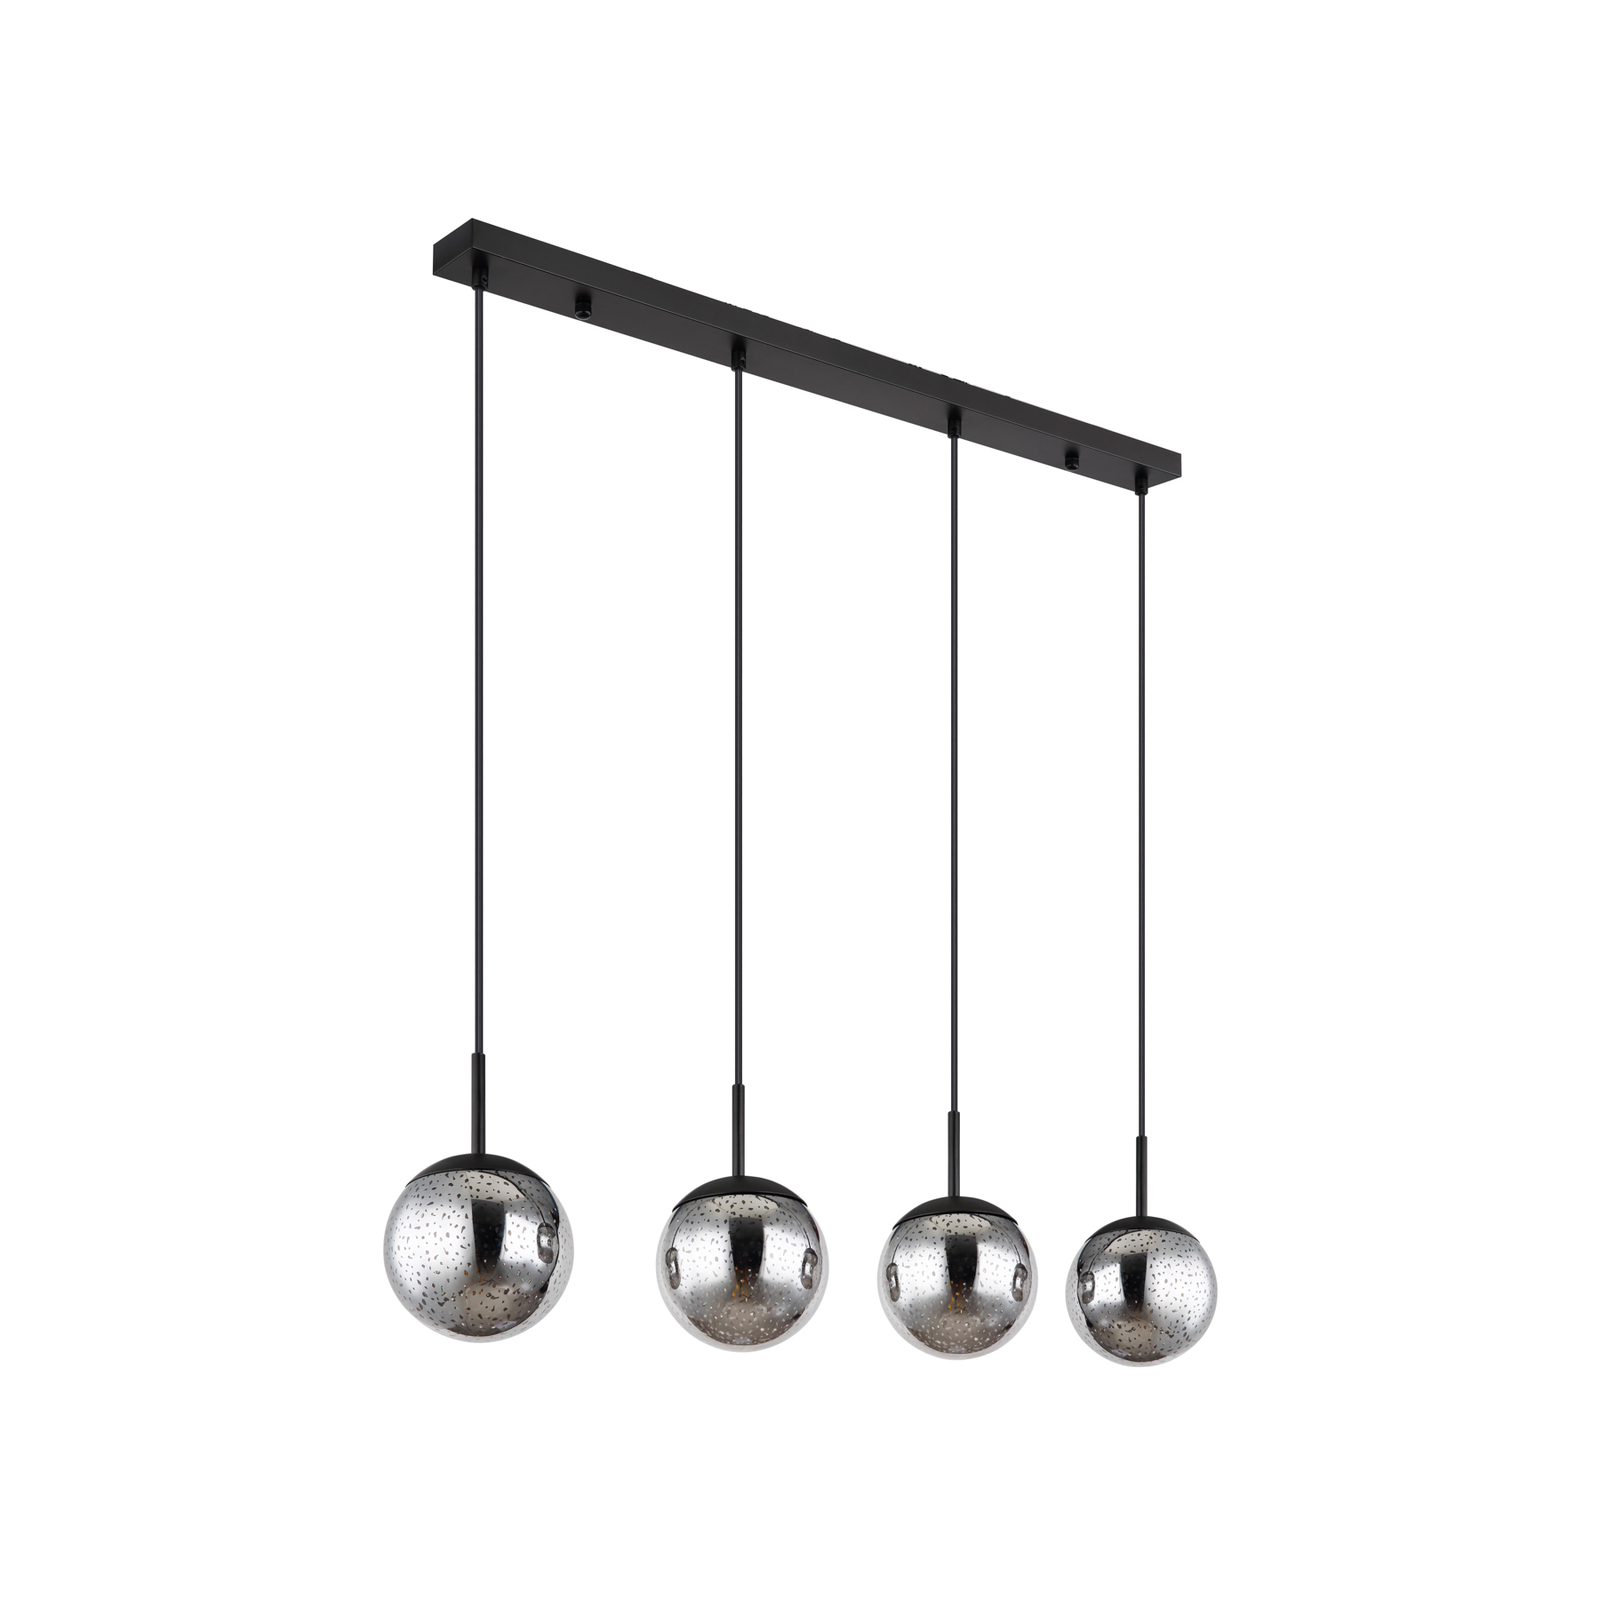 Samos pendant light, length 90 cm, smoke grey, 4-bulb, glass